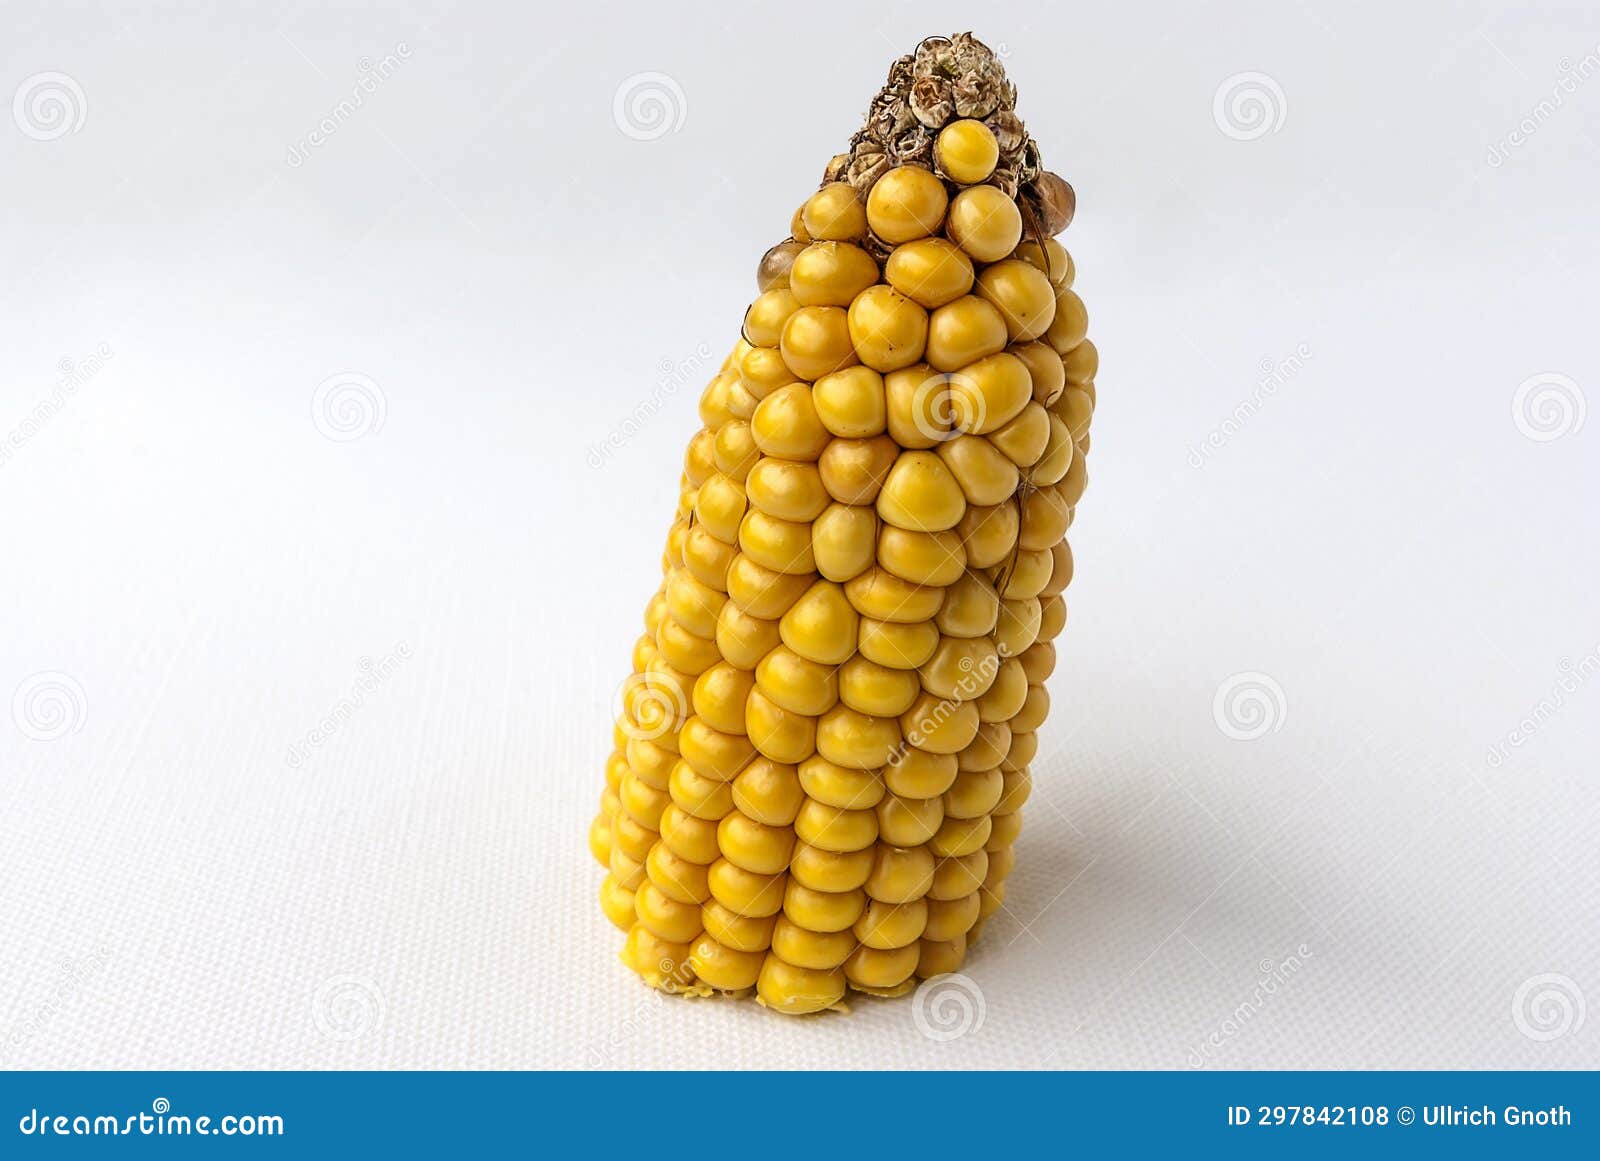 single corncob